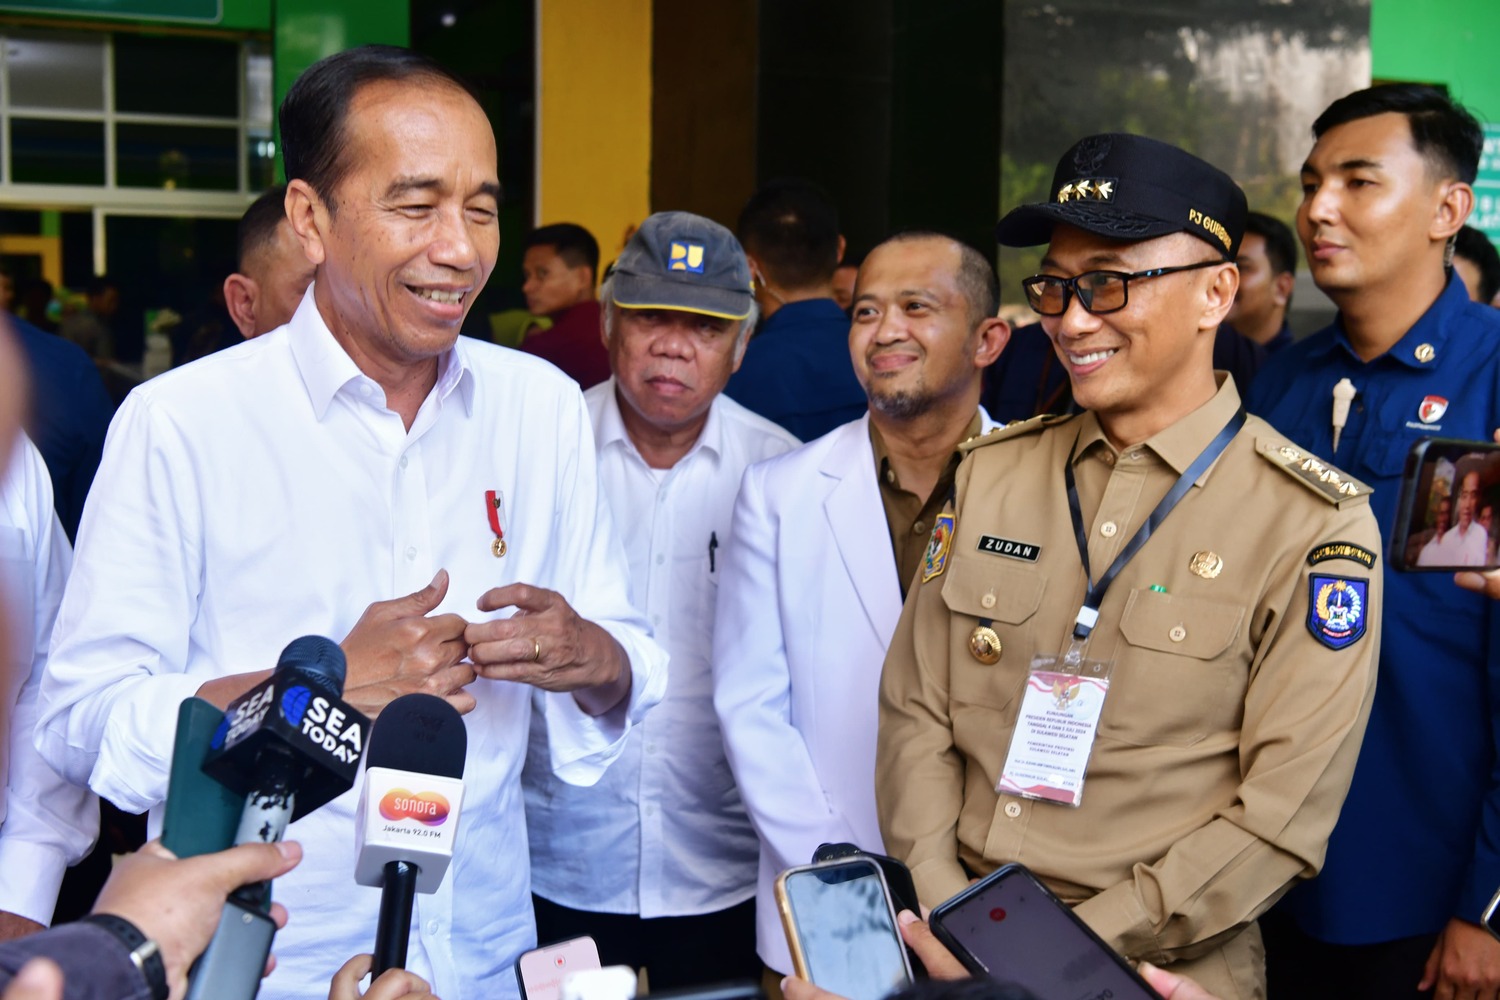 Didampingi Penjabat Gubernur Prof Zudan Arif Fakrulloh Kunjungi RSUD Sinjai, Presiden Jokowi: Bersih, Penataan Baik, Dokter Cukup